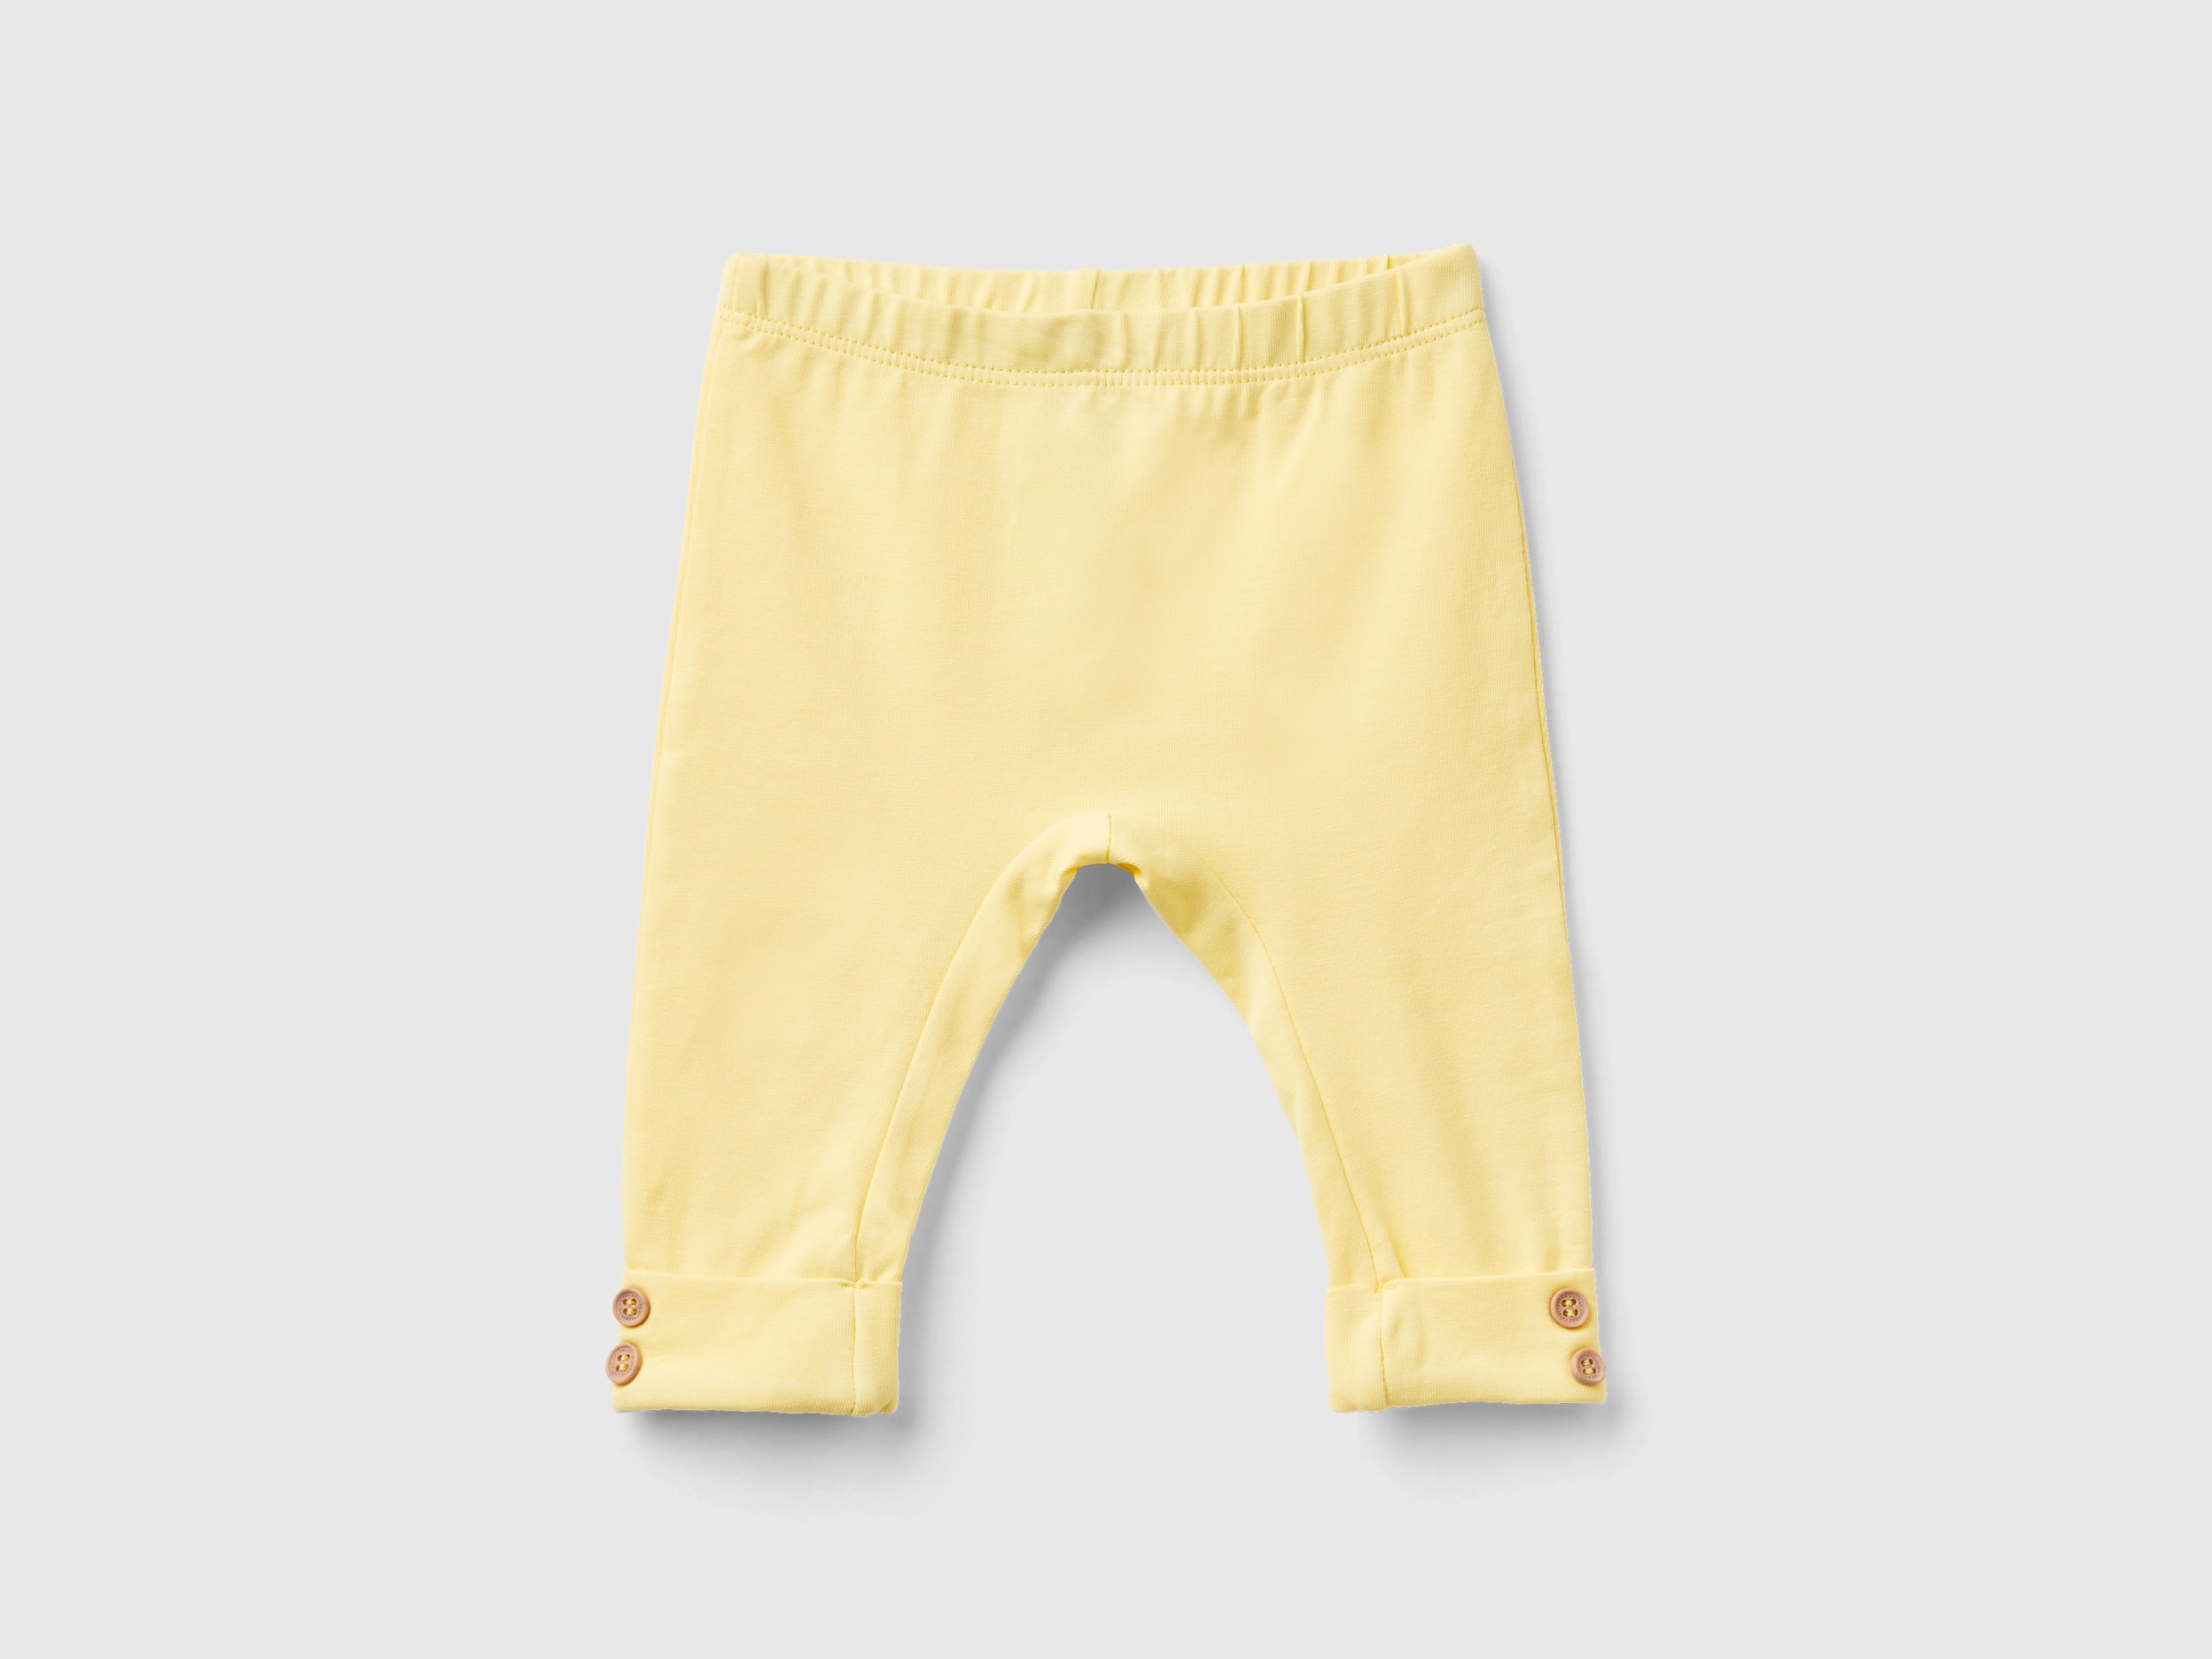 Benetton, Stretch Cotton Leggings, size 9-12, Yellow, Kids